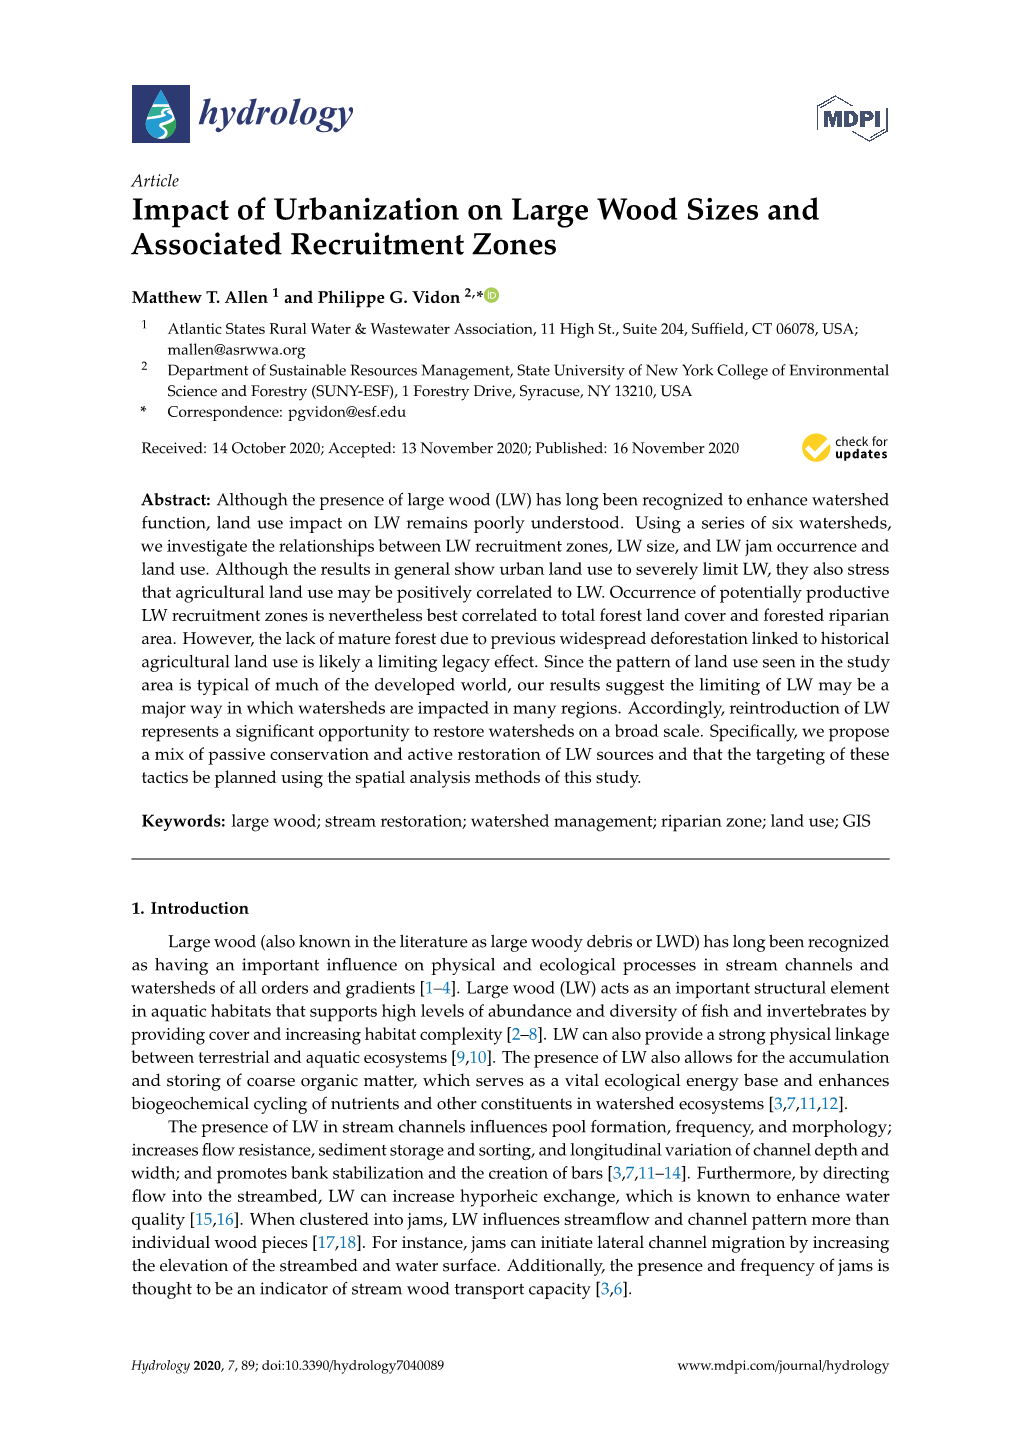 Impact of Urbanization on Large Wood Sizes and Associated Recruitment Zones